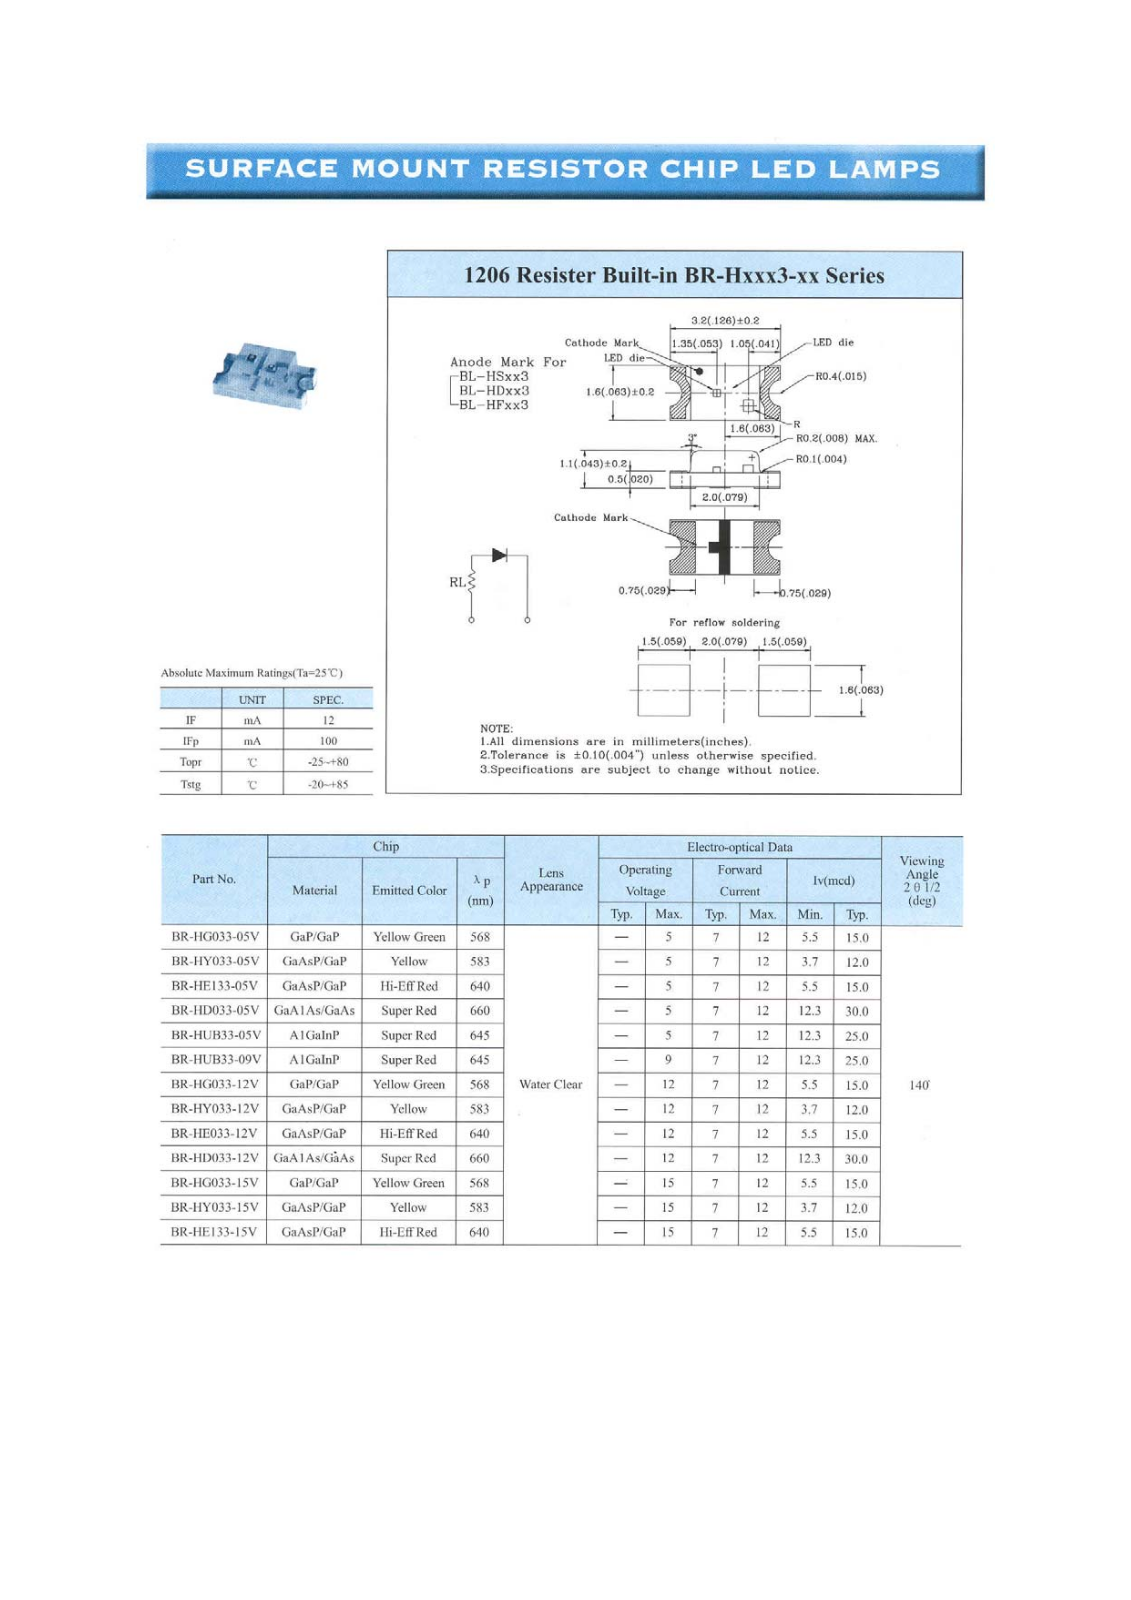 YELLOW STONE CORP BR-HY033-15V, BR-HY033-05V, BR-HUB33-09V, BR-HUB33-05V, BR-HG033-15V Datasheet